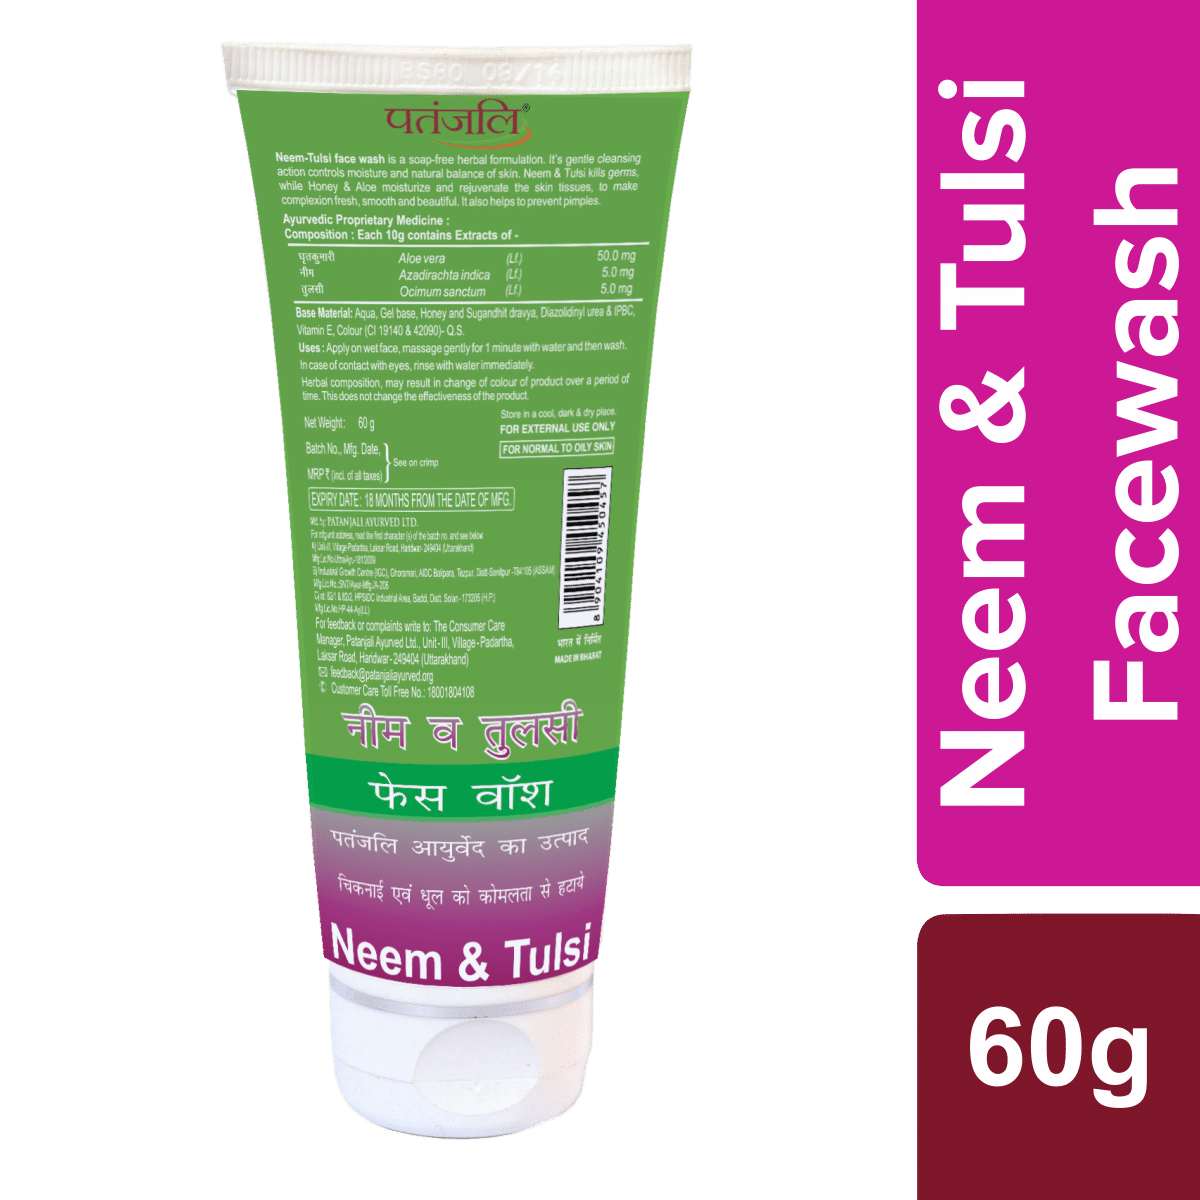 Patanjali Neem & Tulsi Face Wash, 60 gm, Pack of 1 